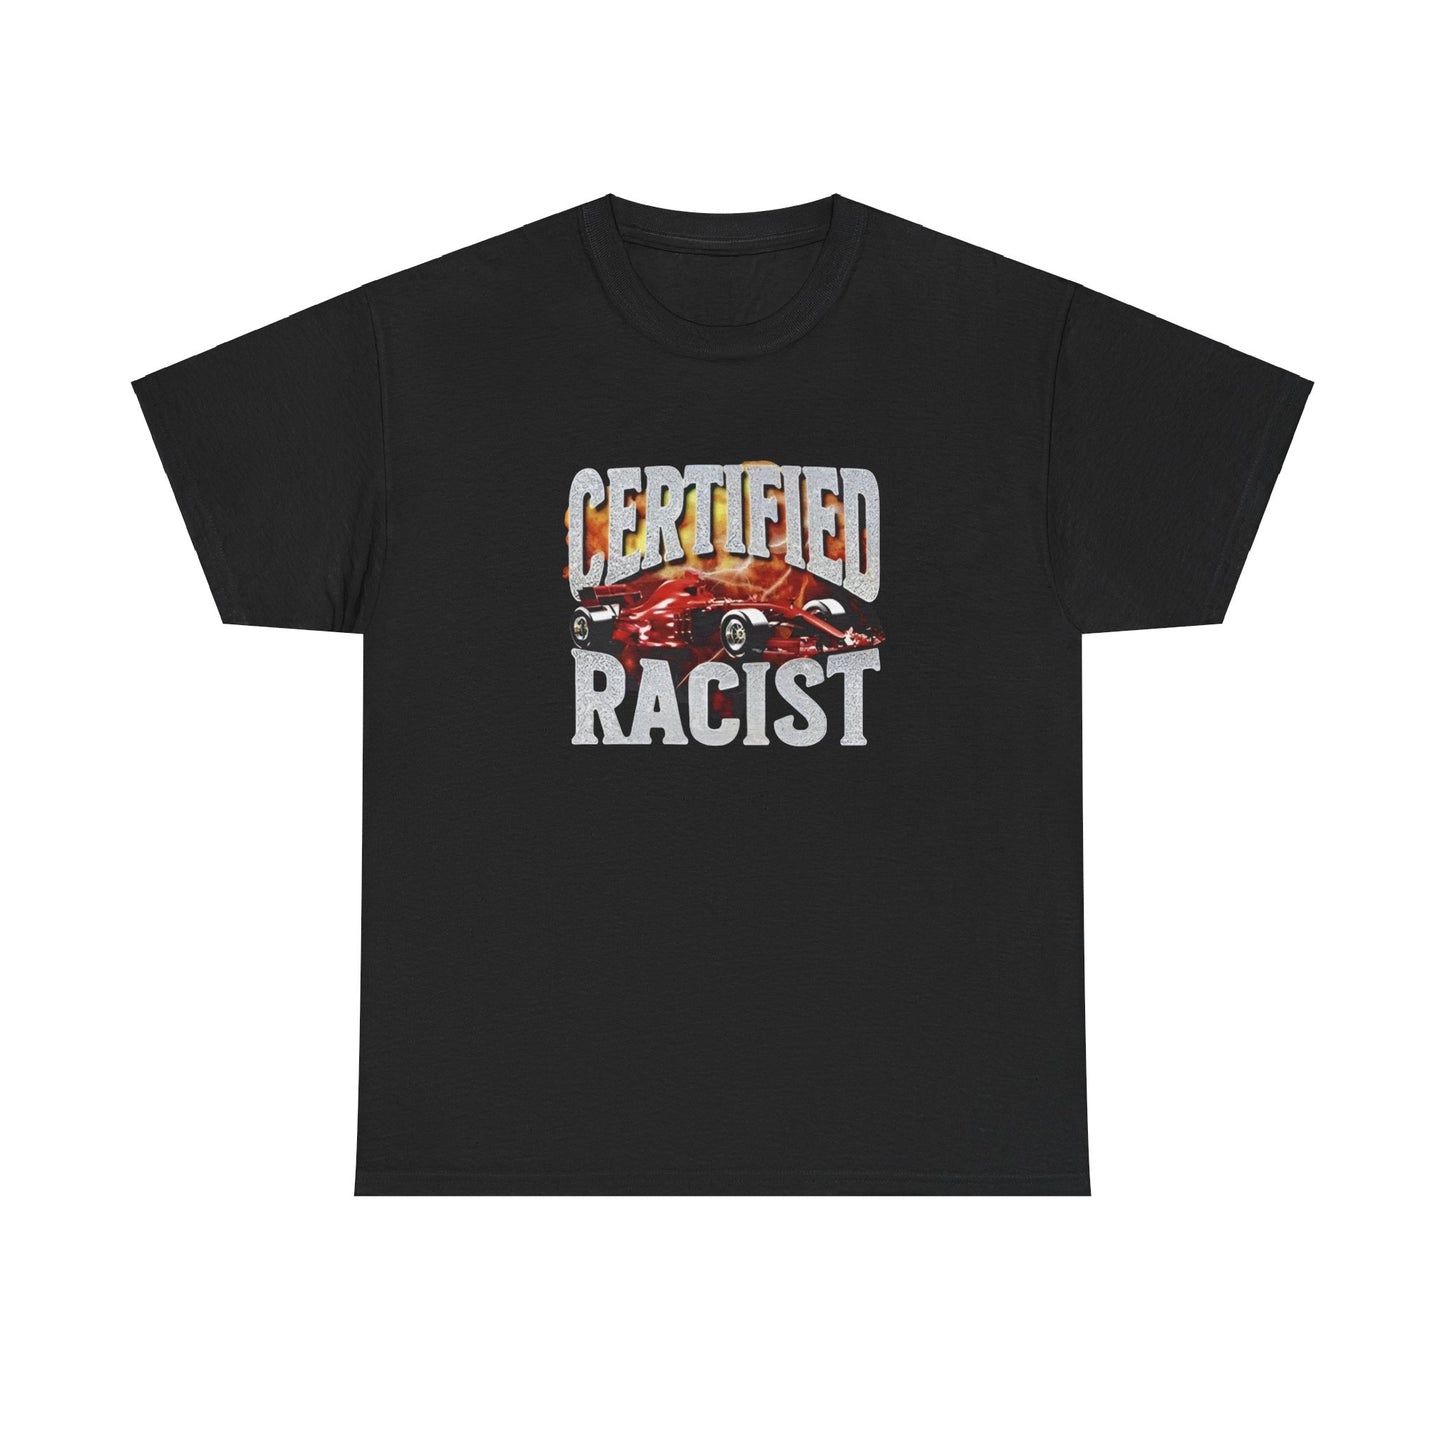 Certified Racist Tee